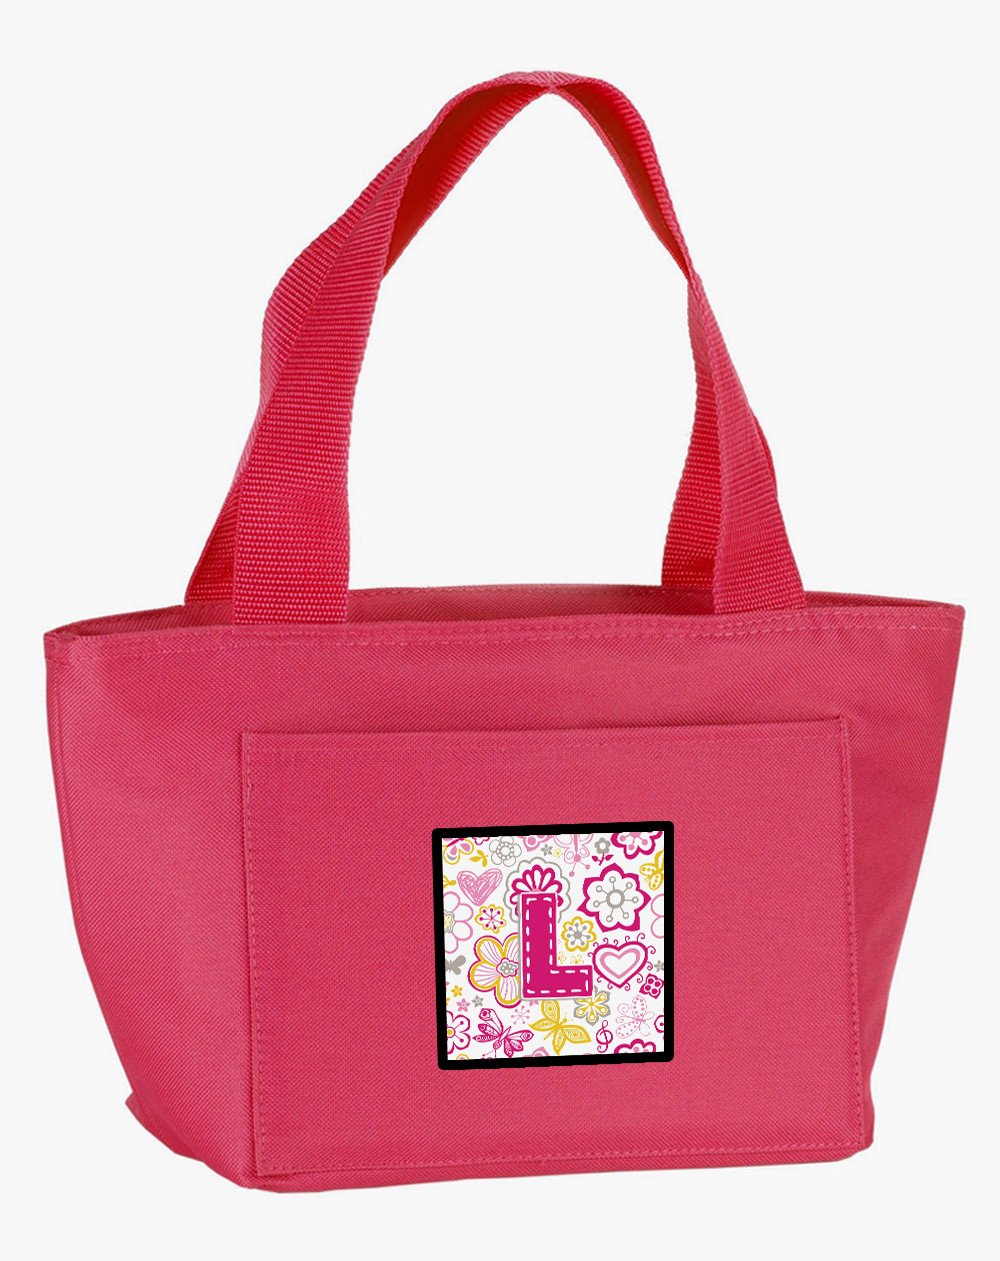 Letter L Flowers and Butterflies Pink Lunch Bag CJ2005-LPK-8808 by Caroline's Treasures